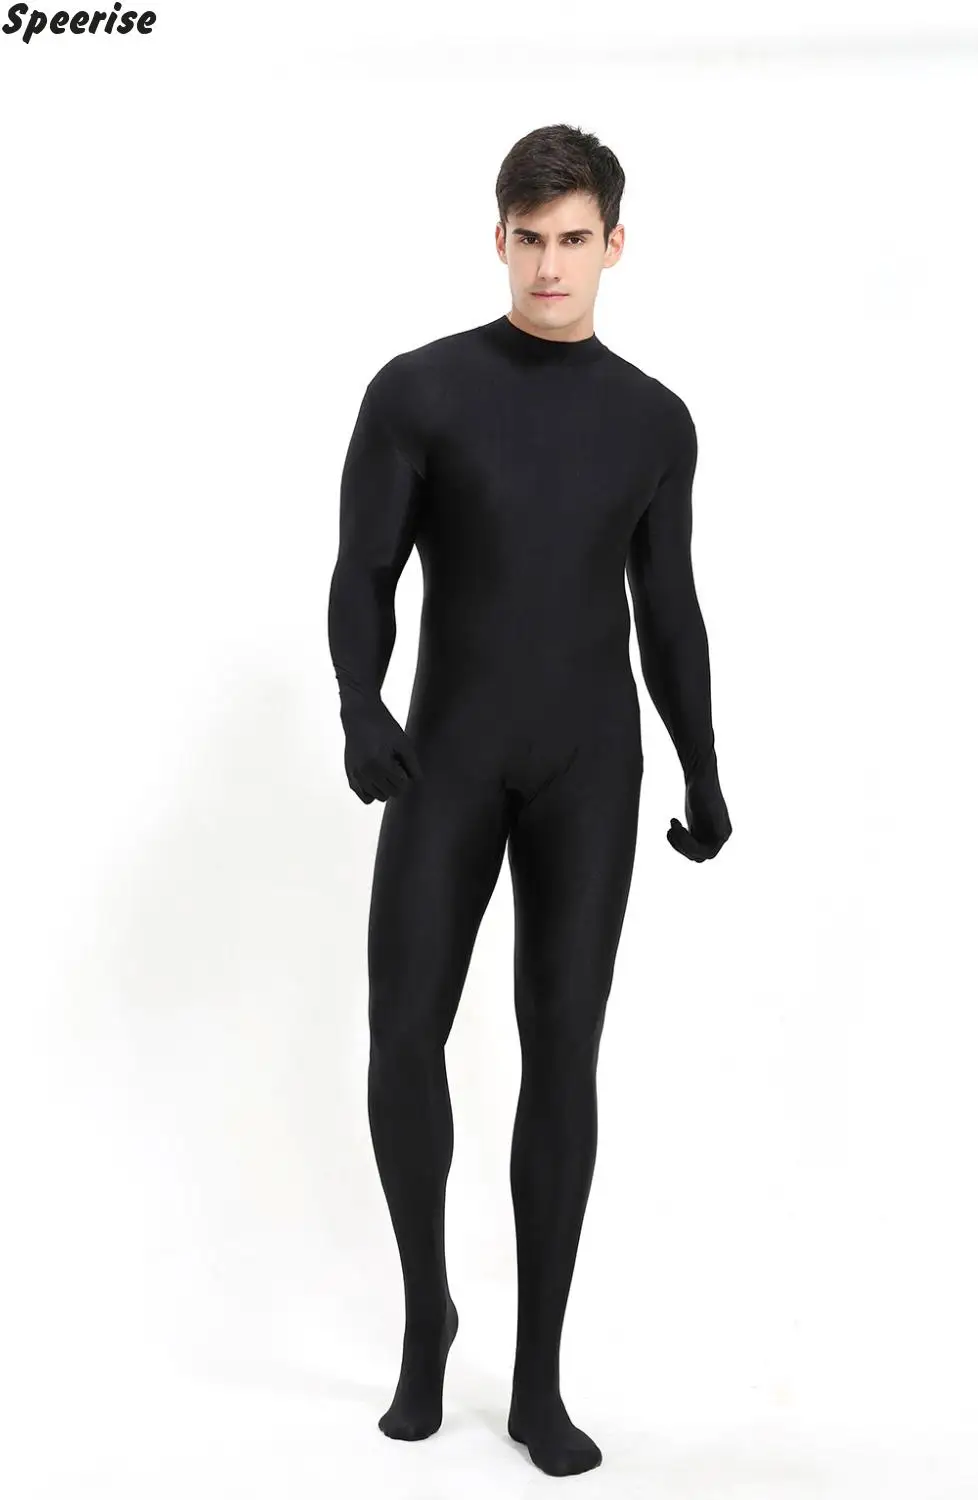 Aoylisey Adult Black Spandex Full Body Zentai Footed Jumpsuit Unisex  Bodysuit Women Handed Unitard Skin Tight Halloween Costume